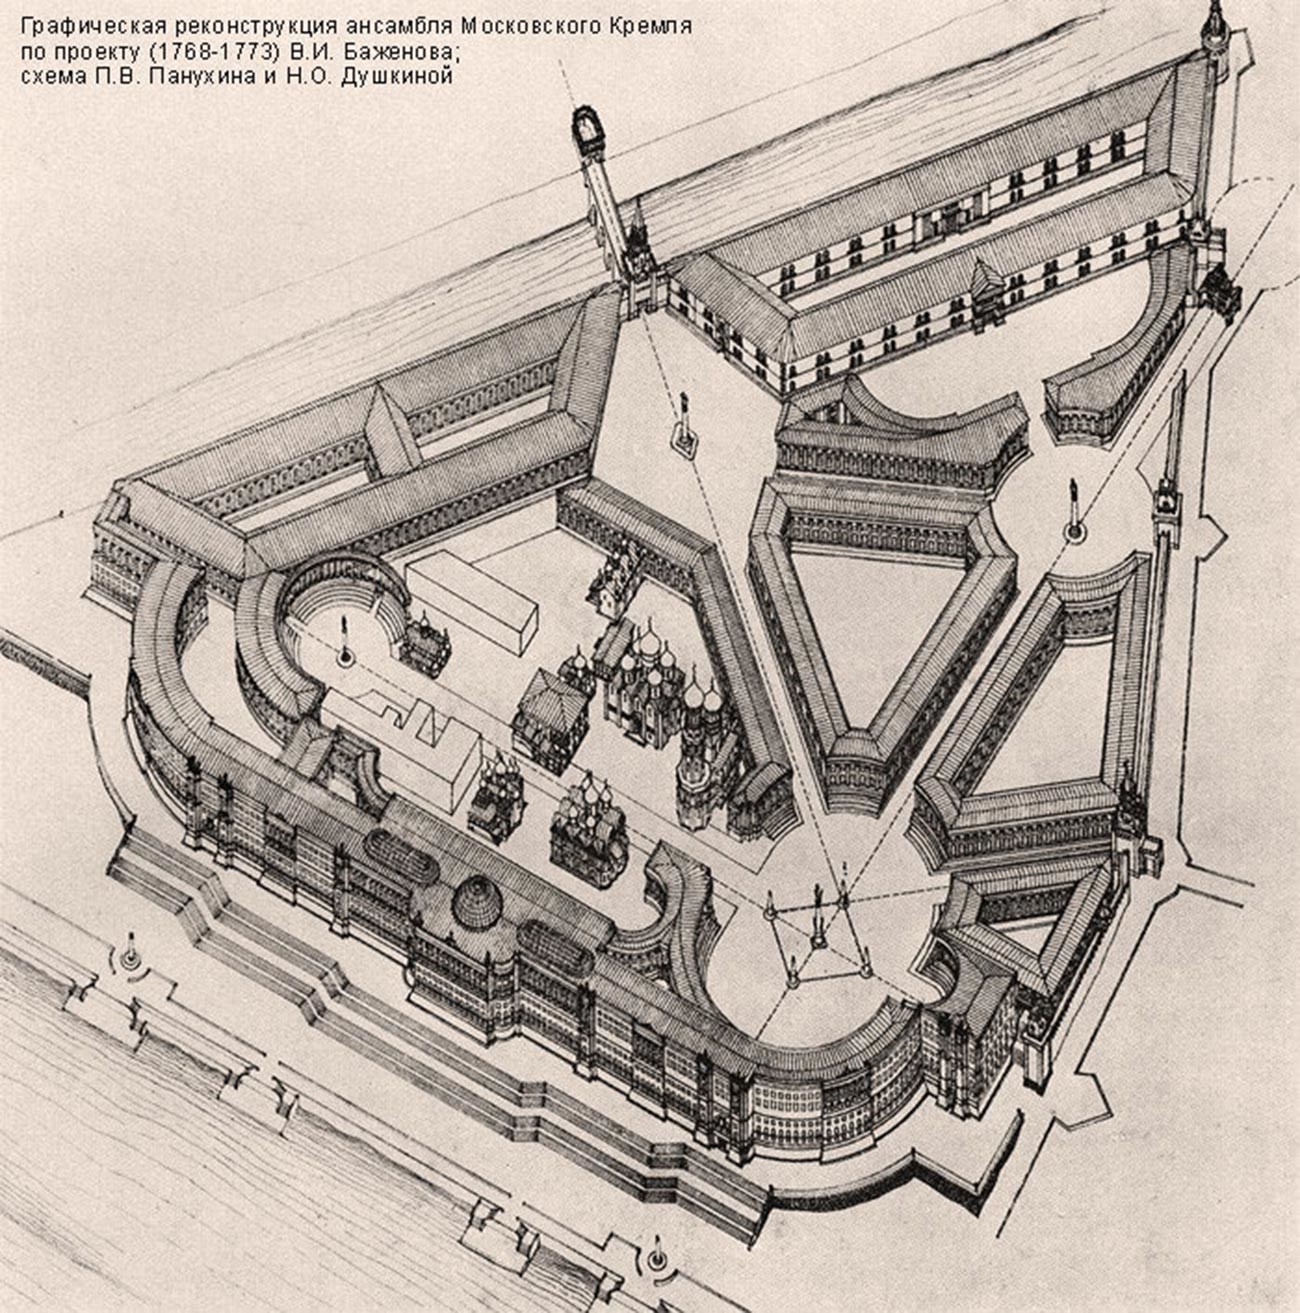 Graphic reconstruction of Vasily Bazhenov's project